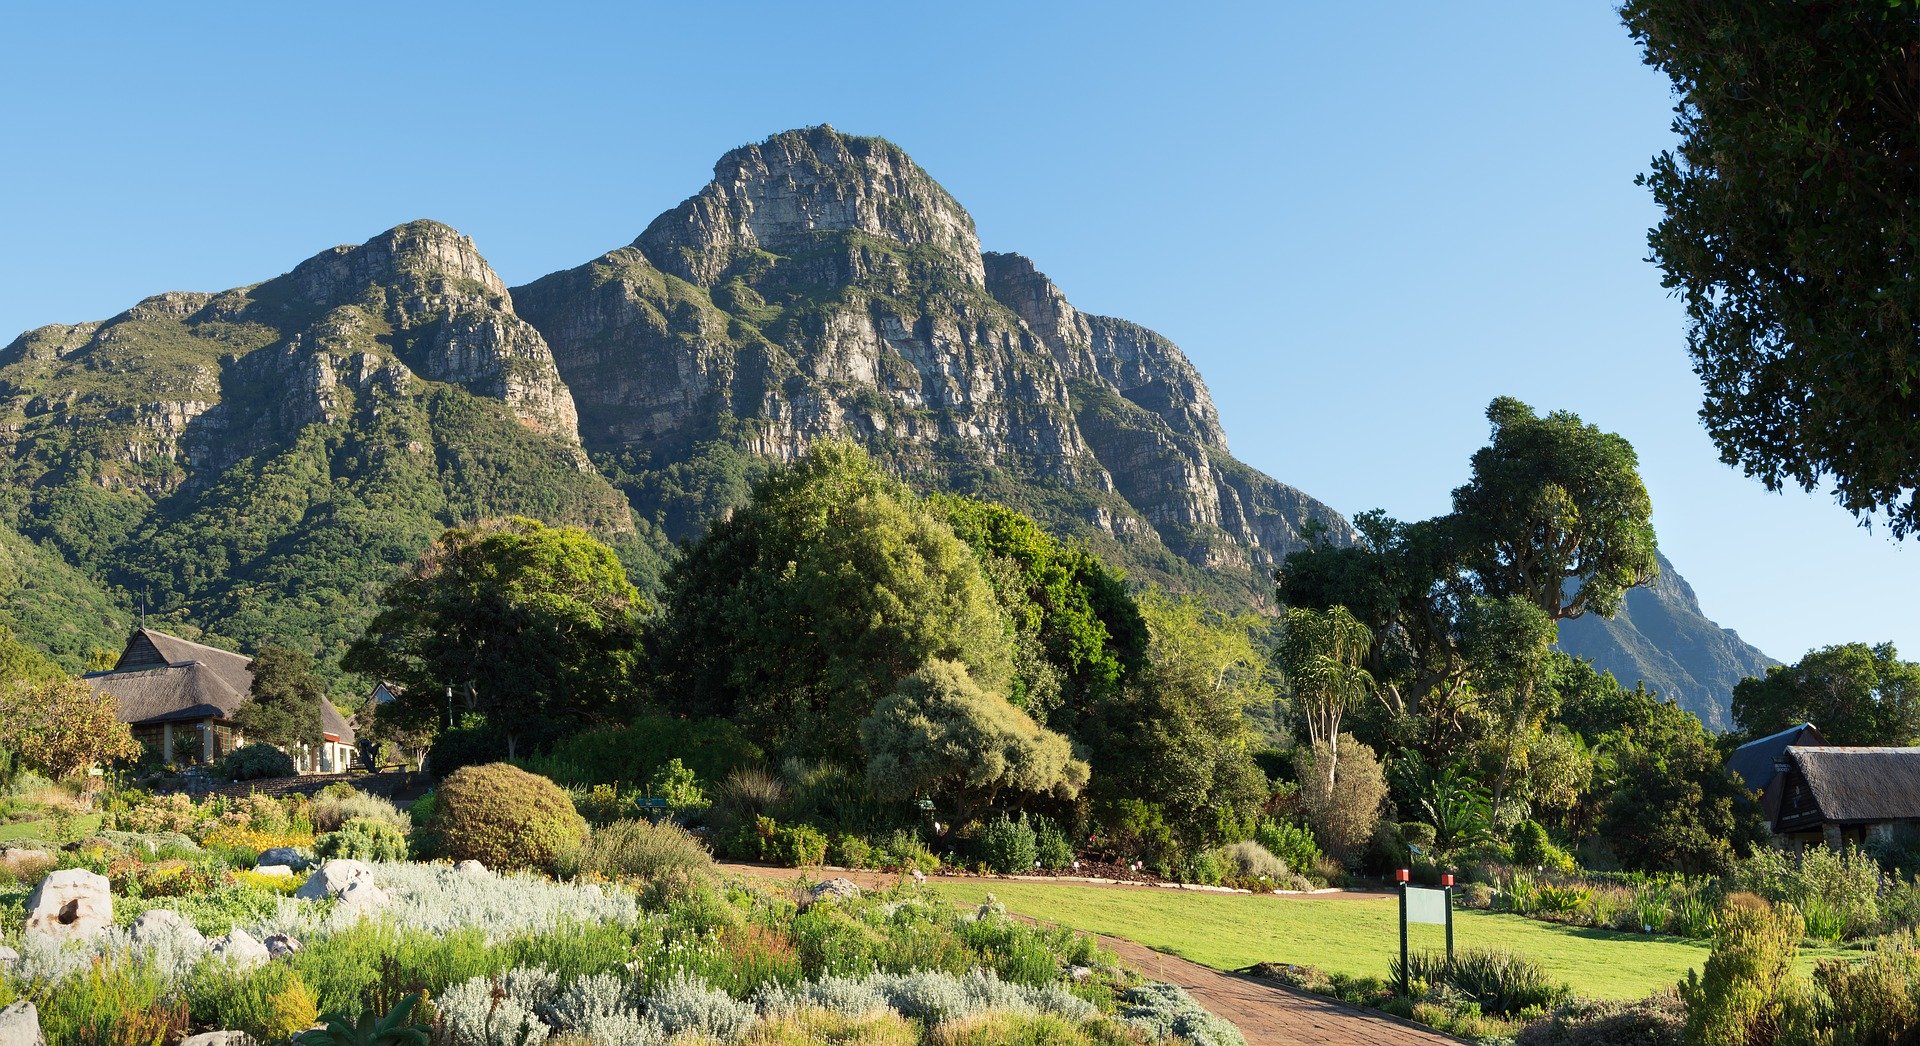 Kirstenbosch national botanical gardens in Cape Town.